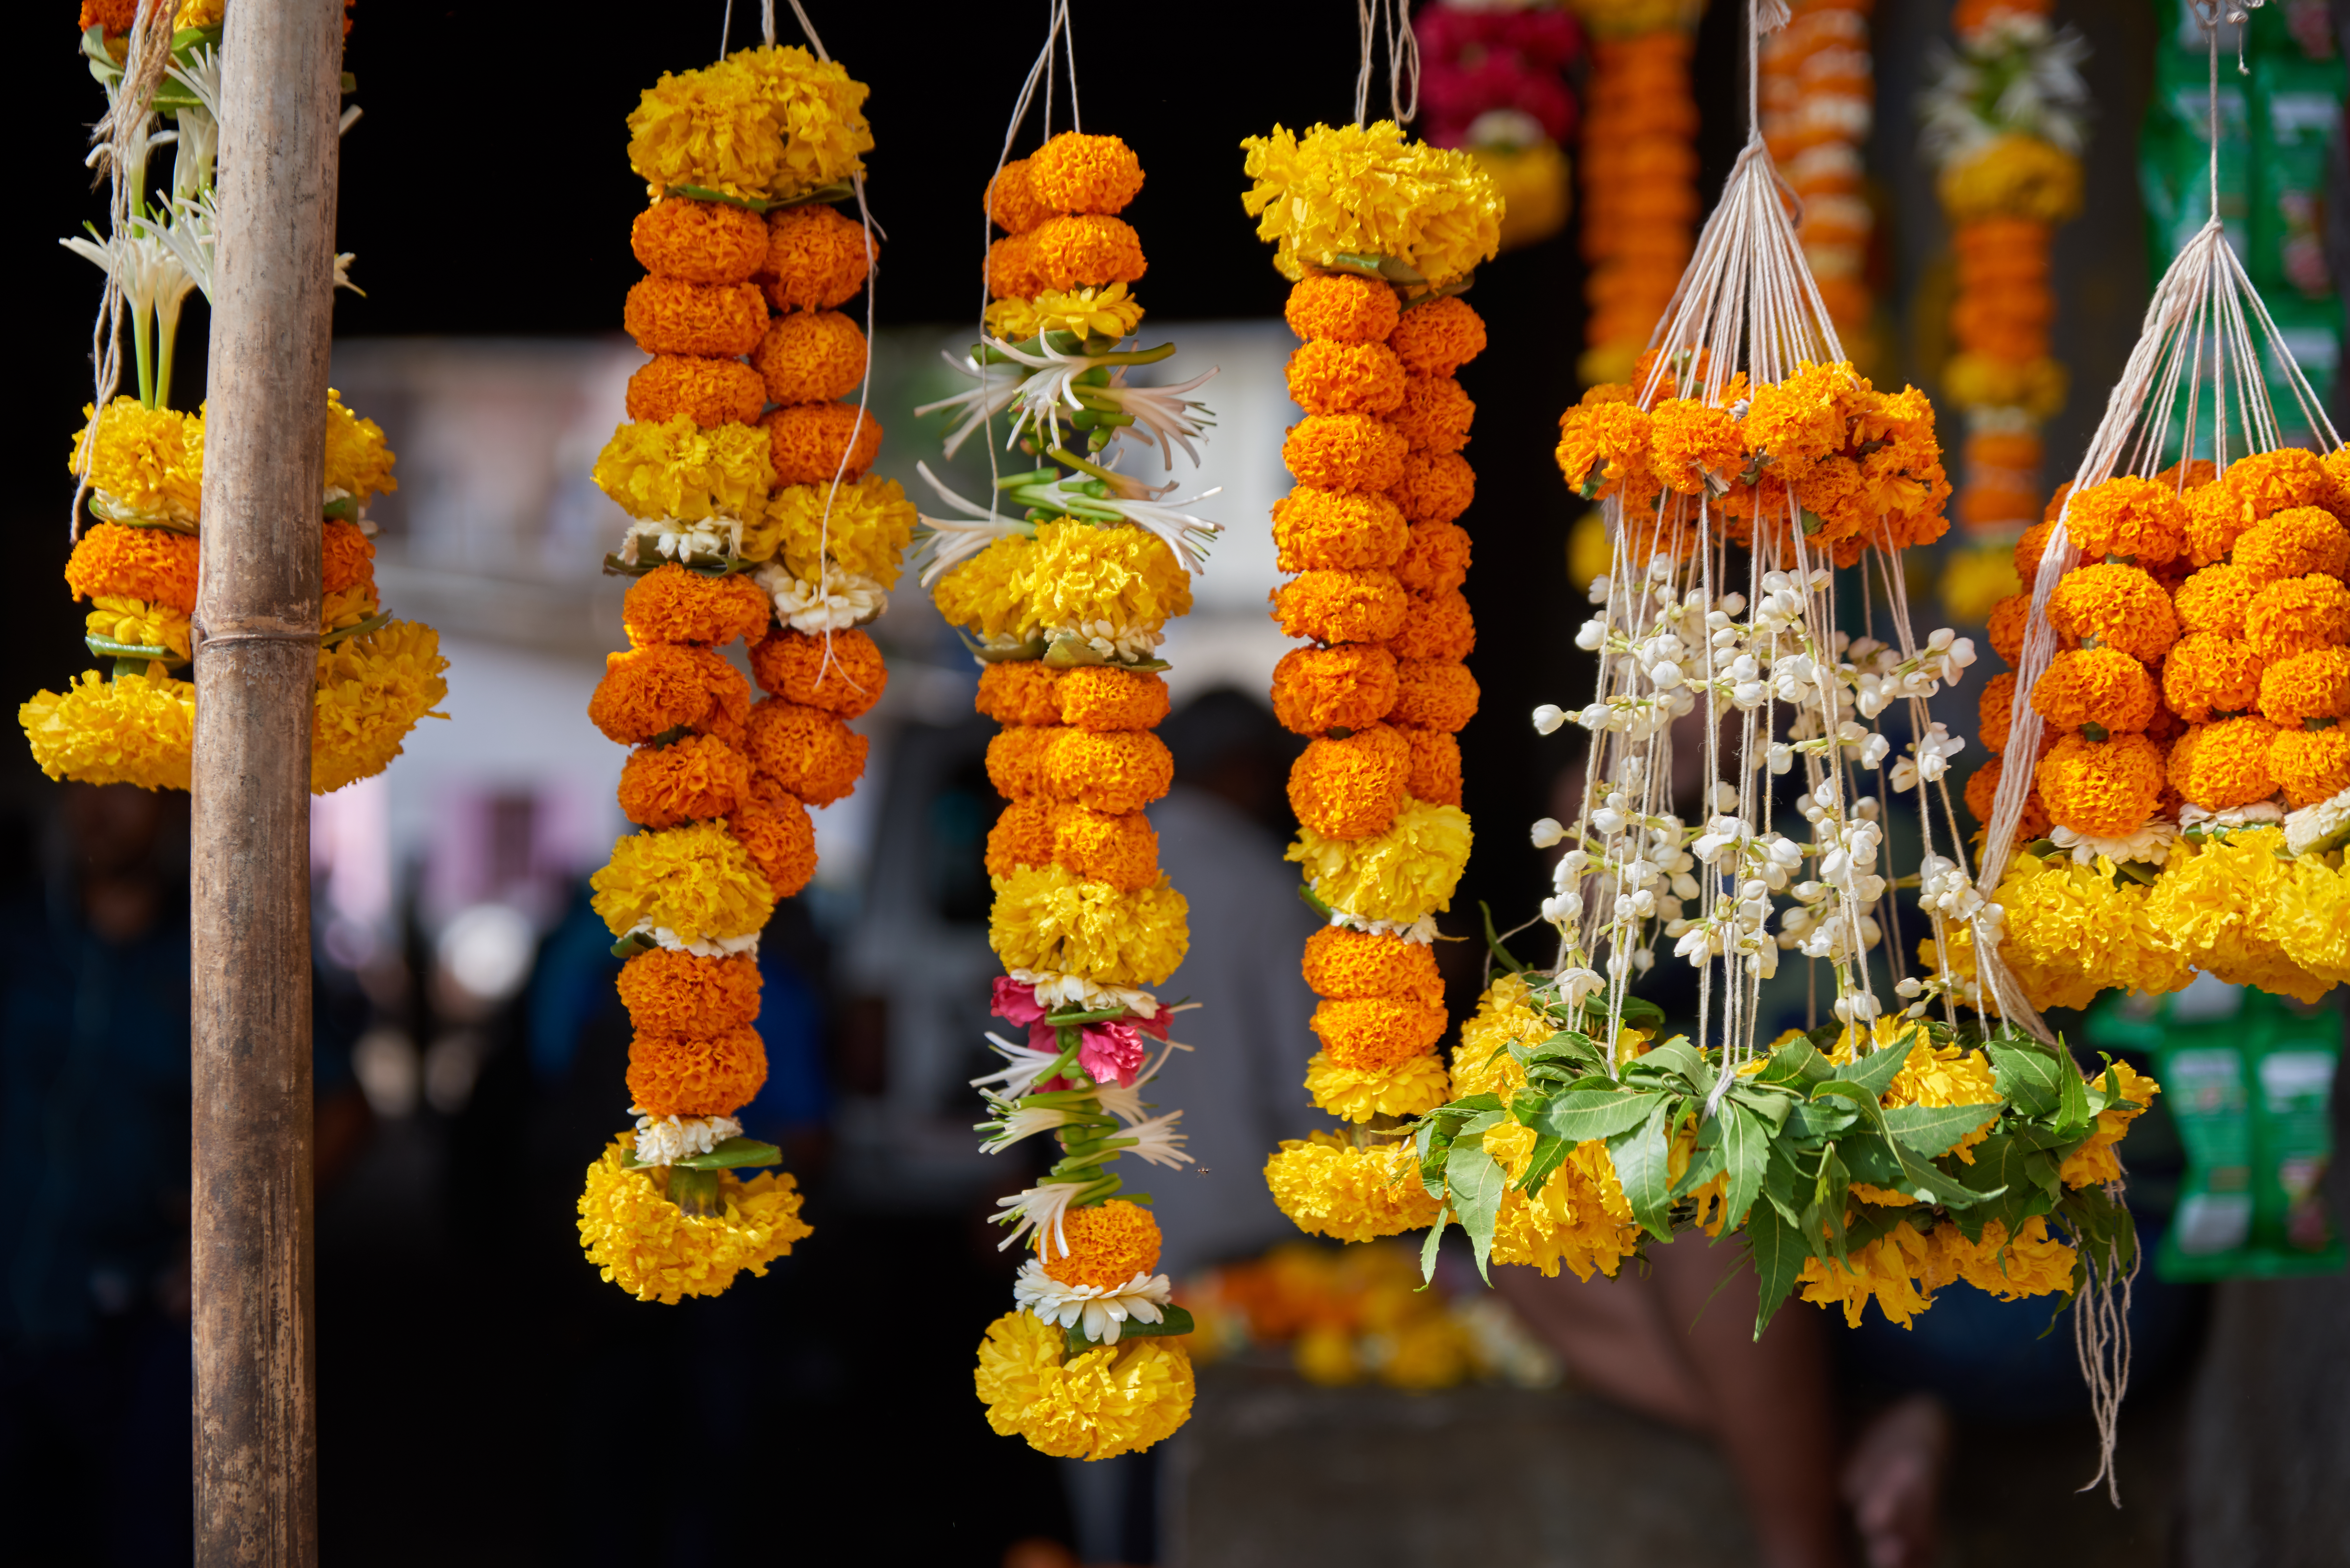 Blommor på marknad i Indien